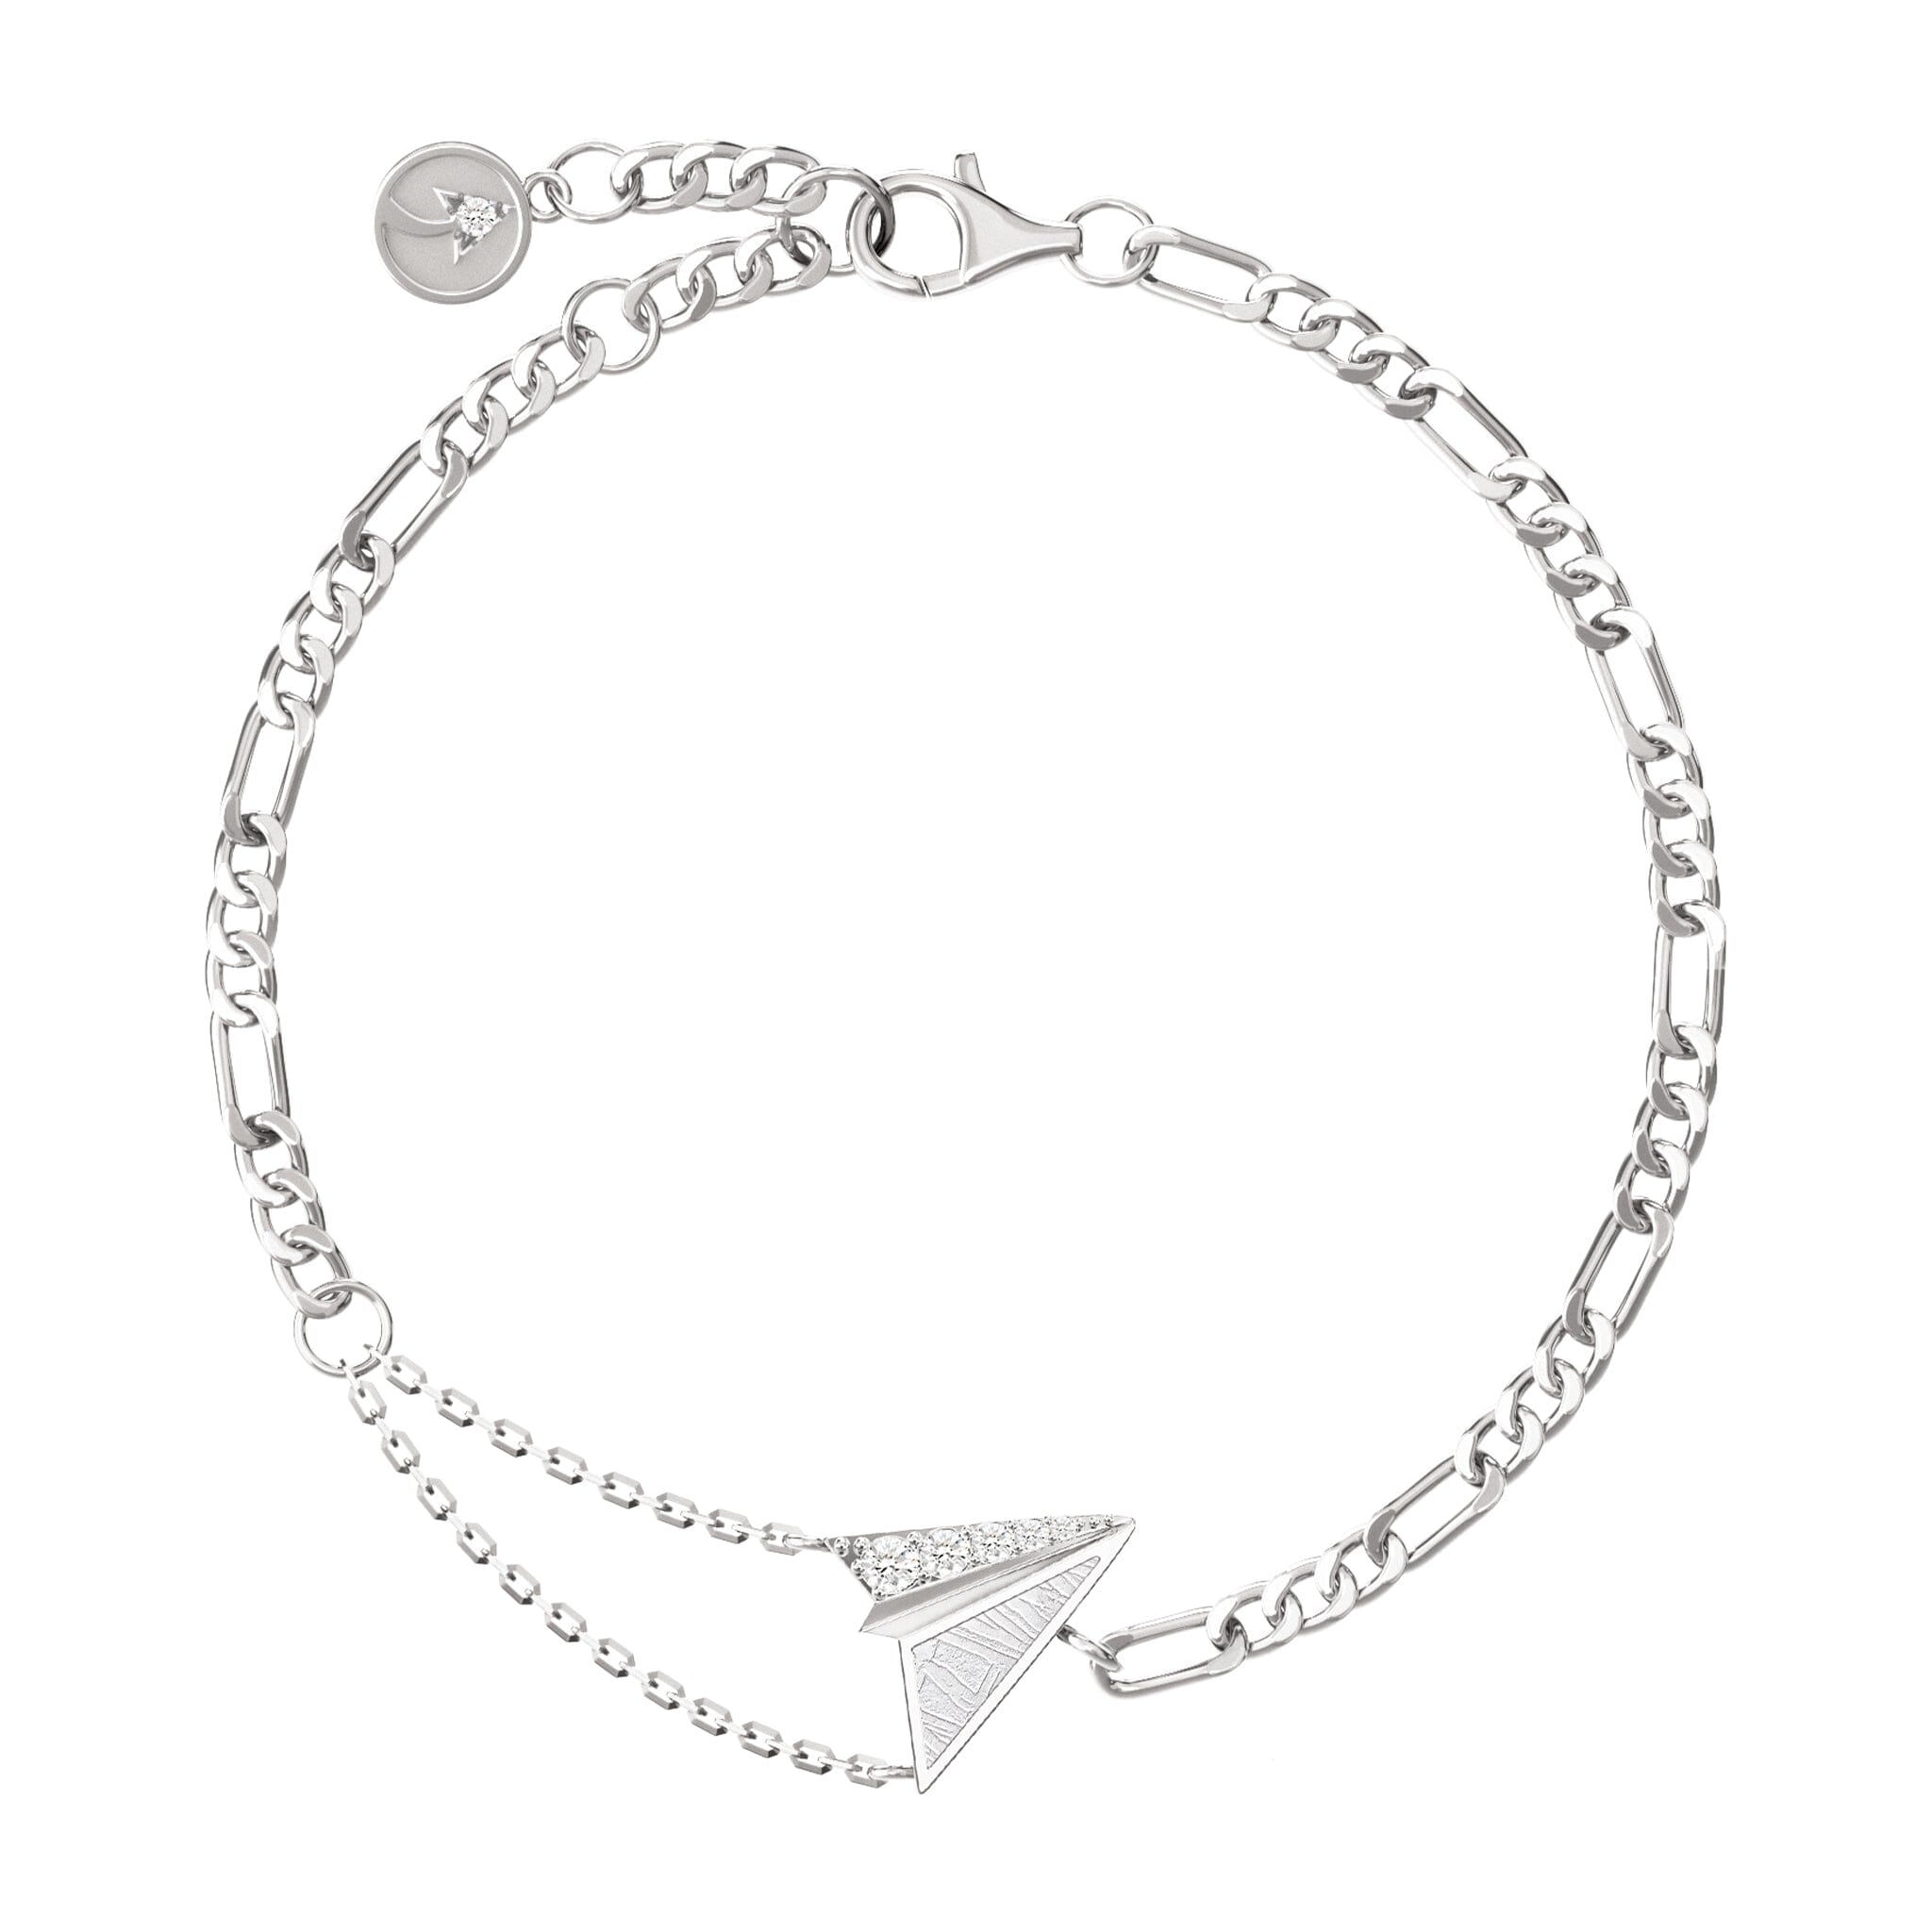 Women's Paper Airplane Bracelet with Meteorite Bracelets WAA FASHION GROUP 